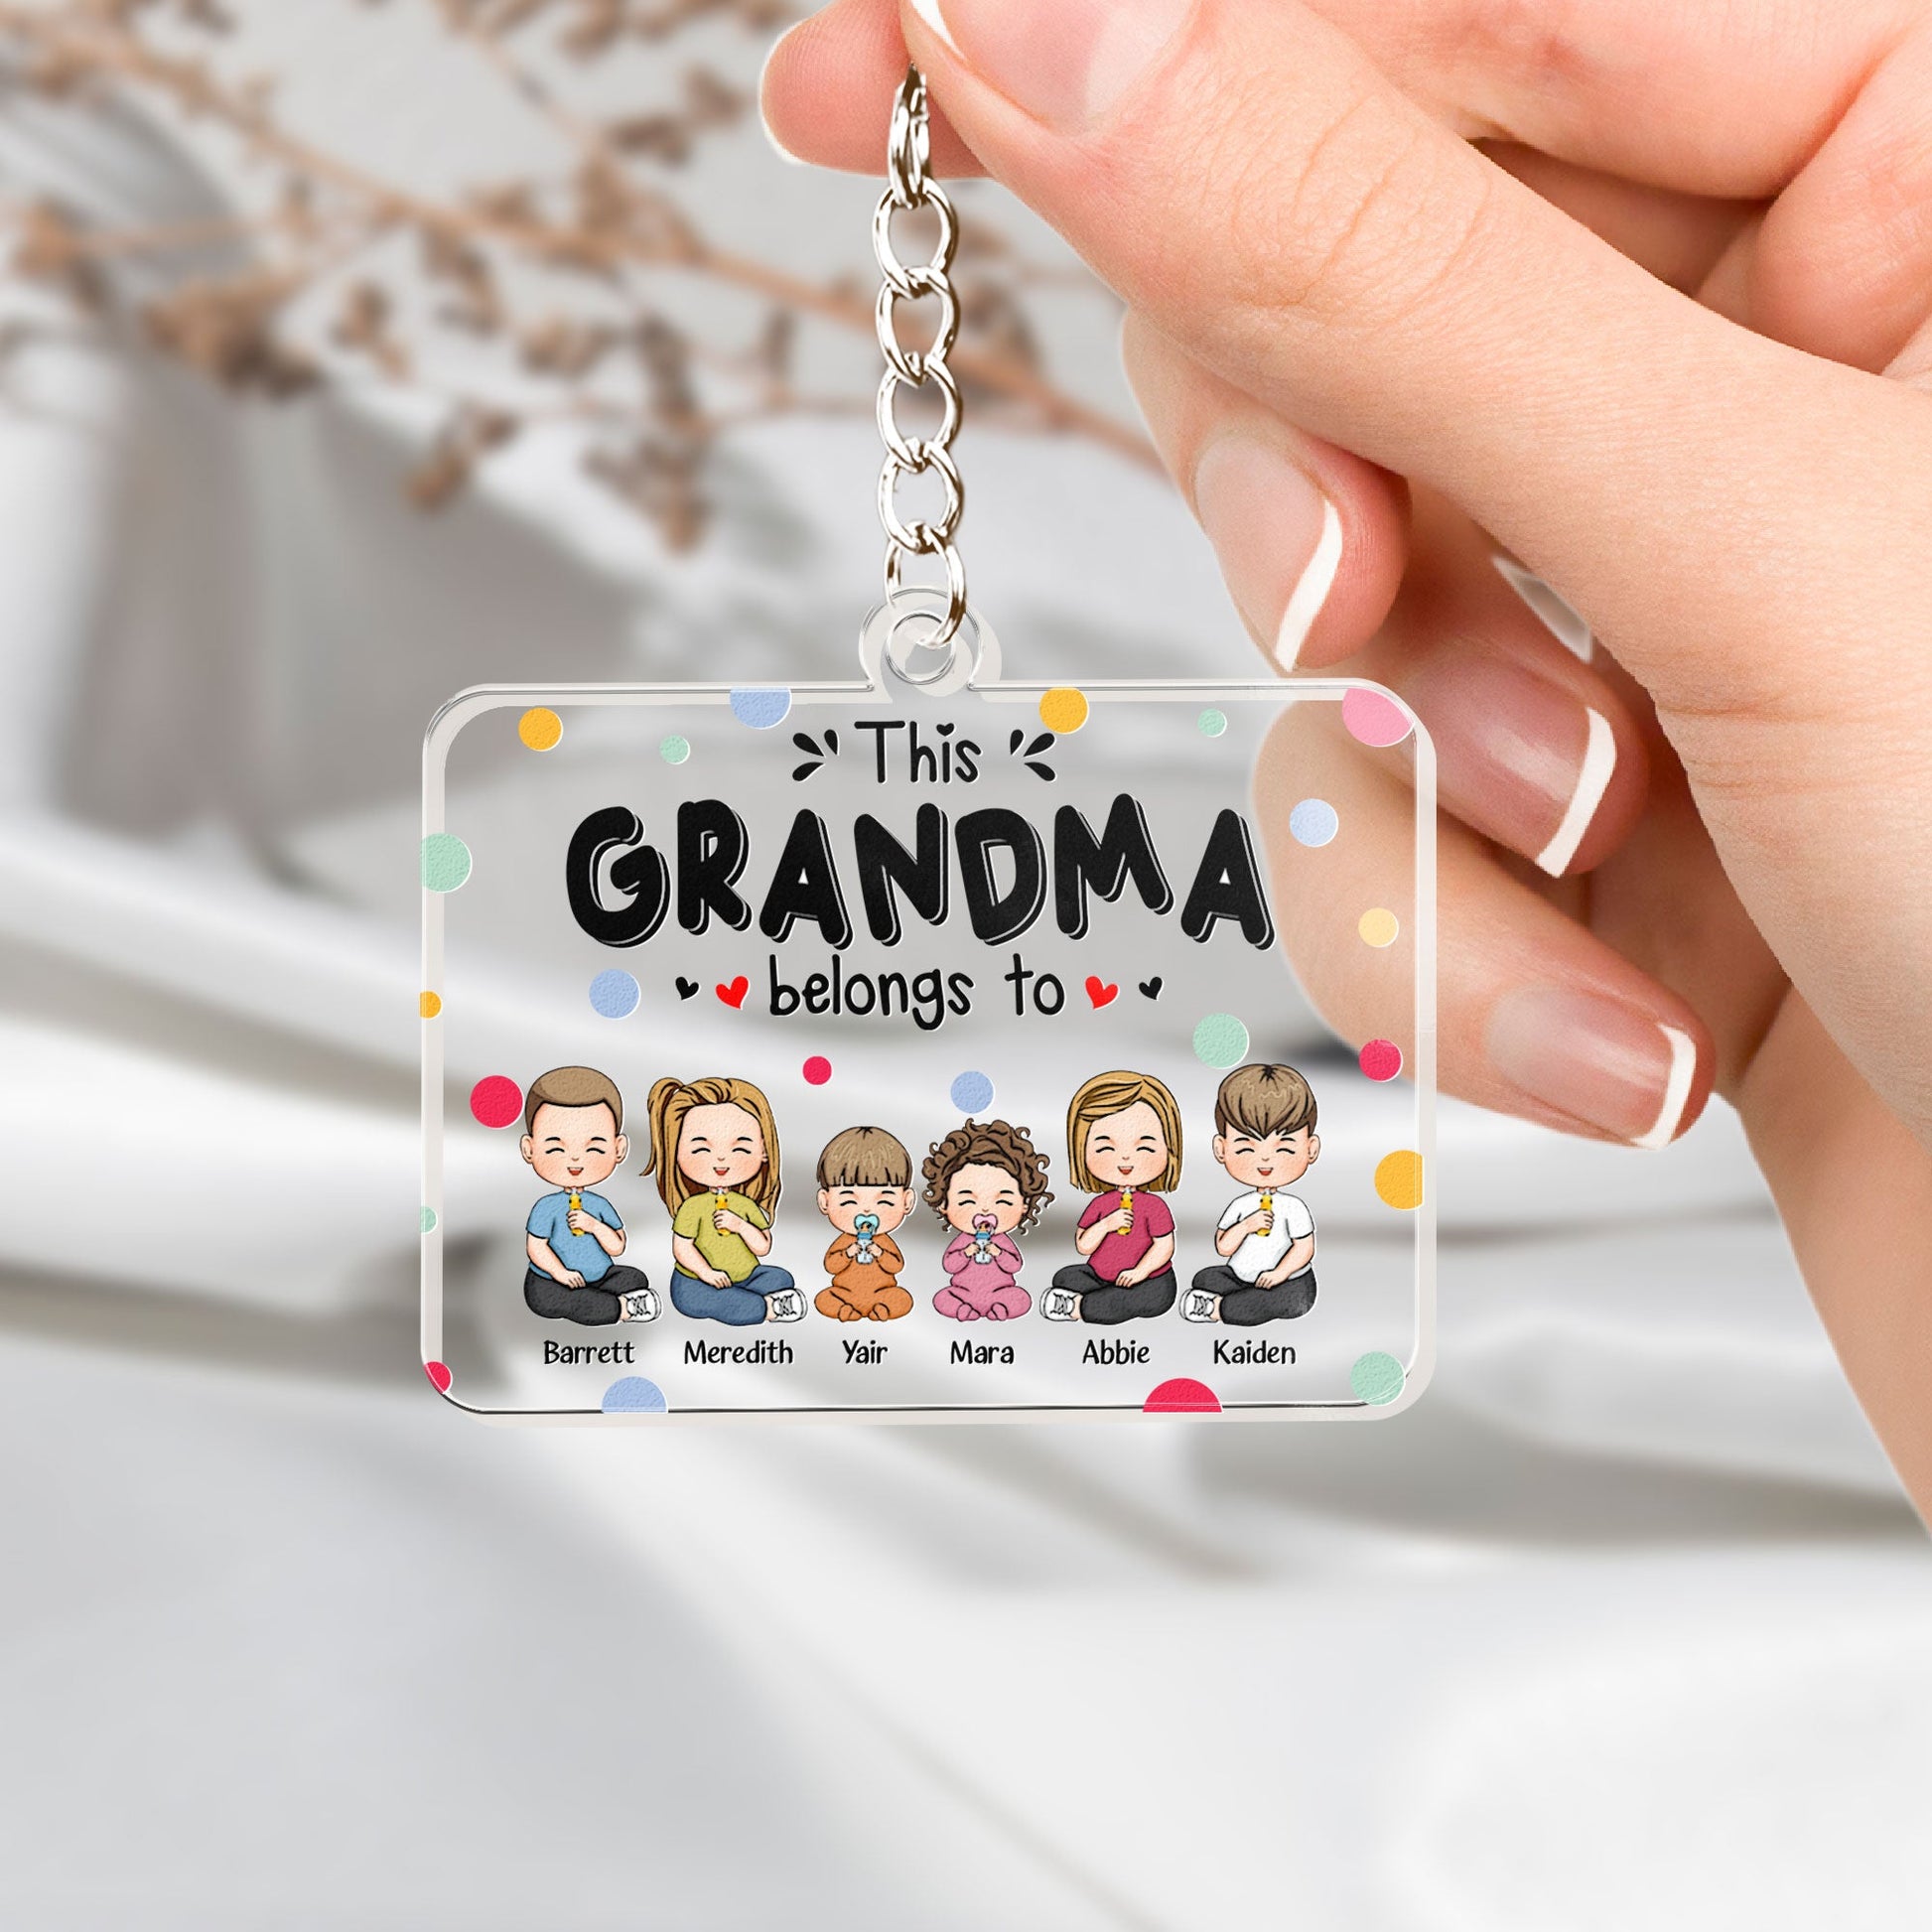 Be Safe, Make Good Choices And Call Your Grandma/Grandpa Keychain